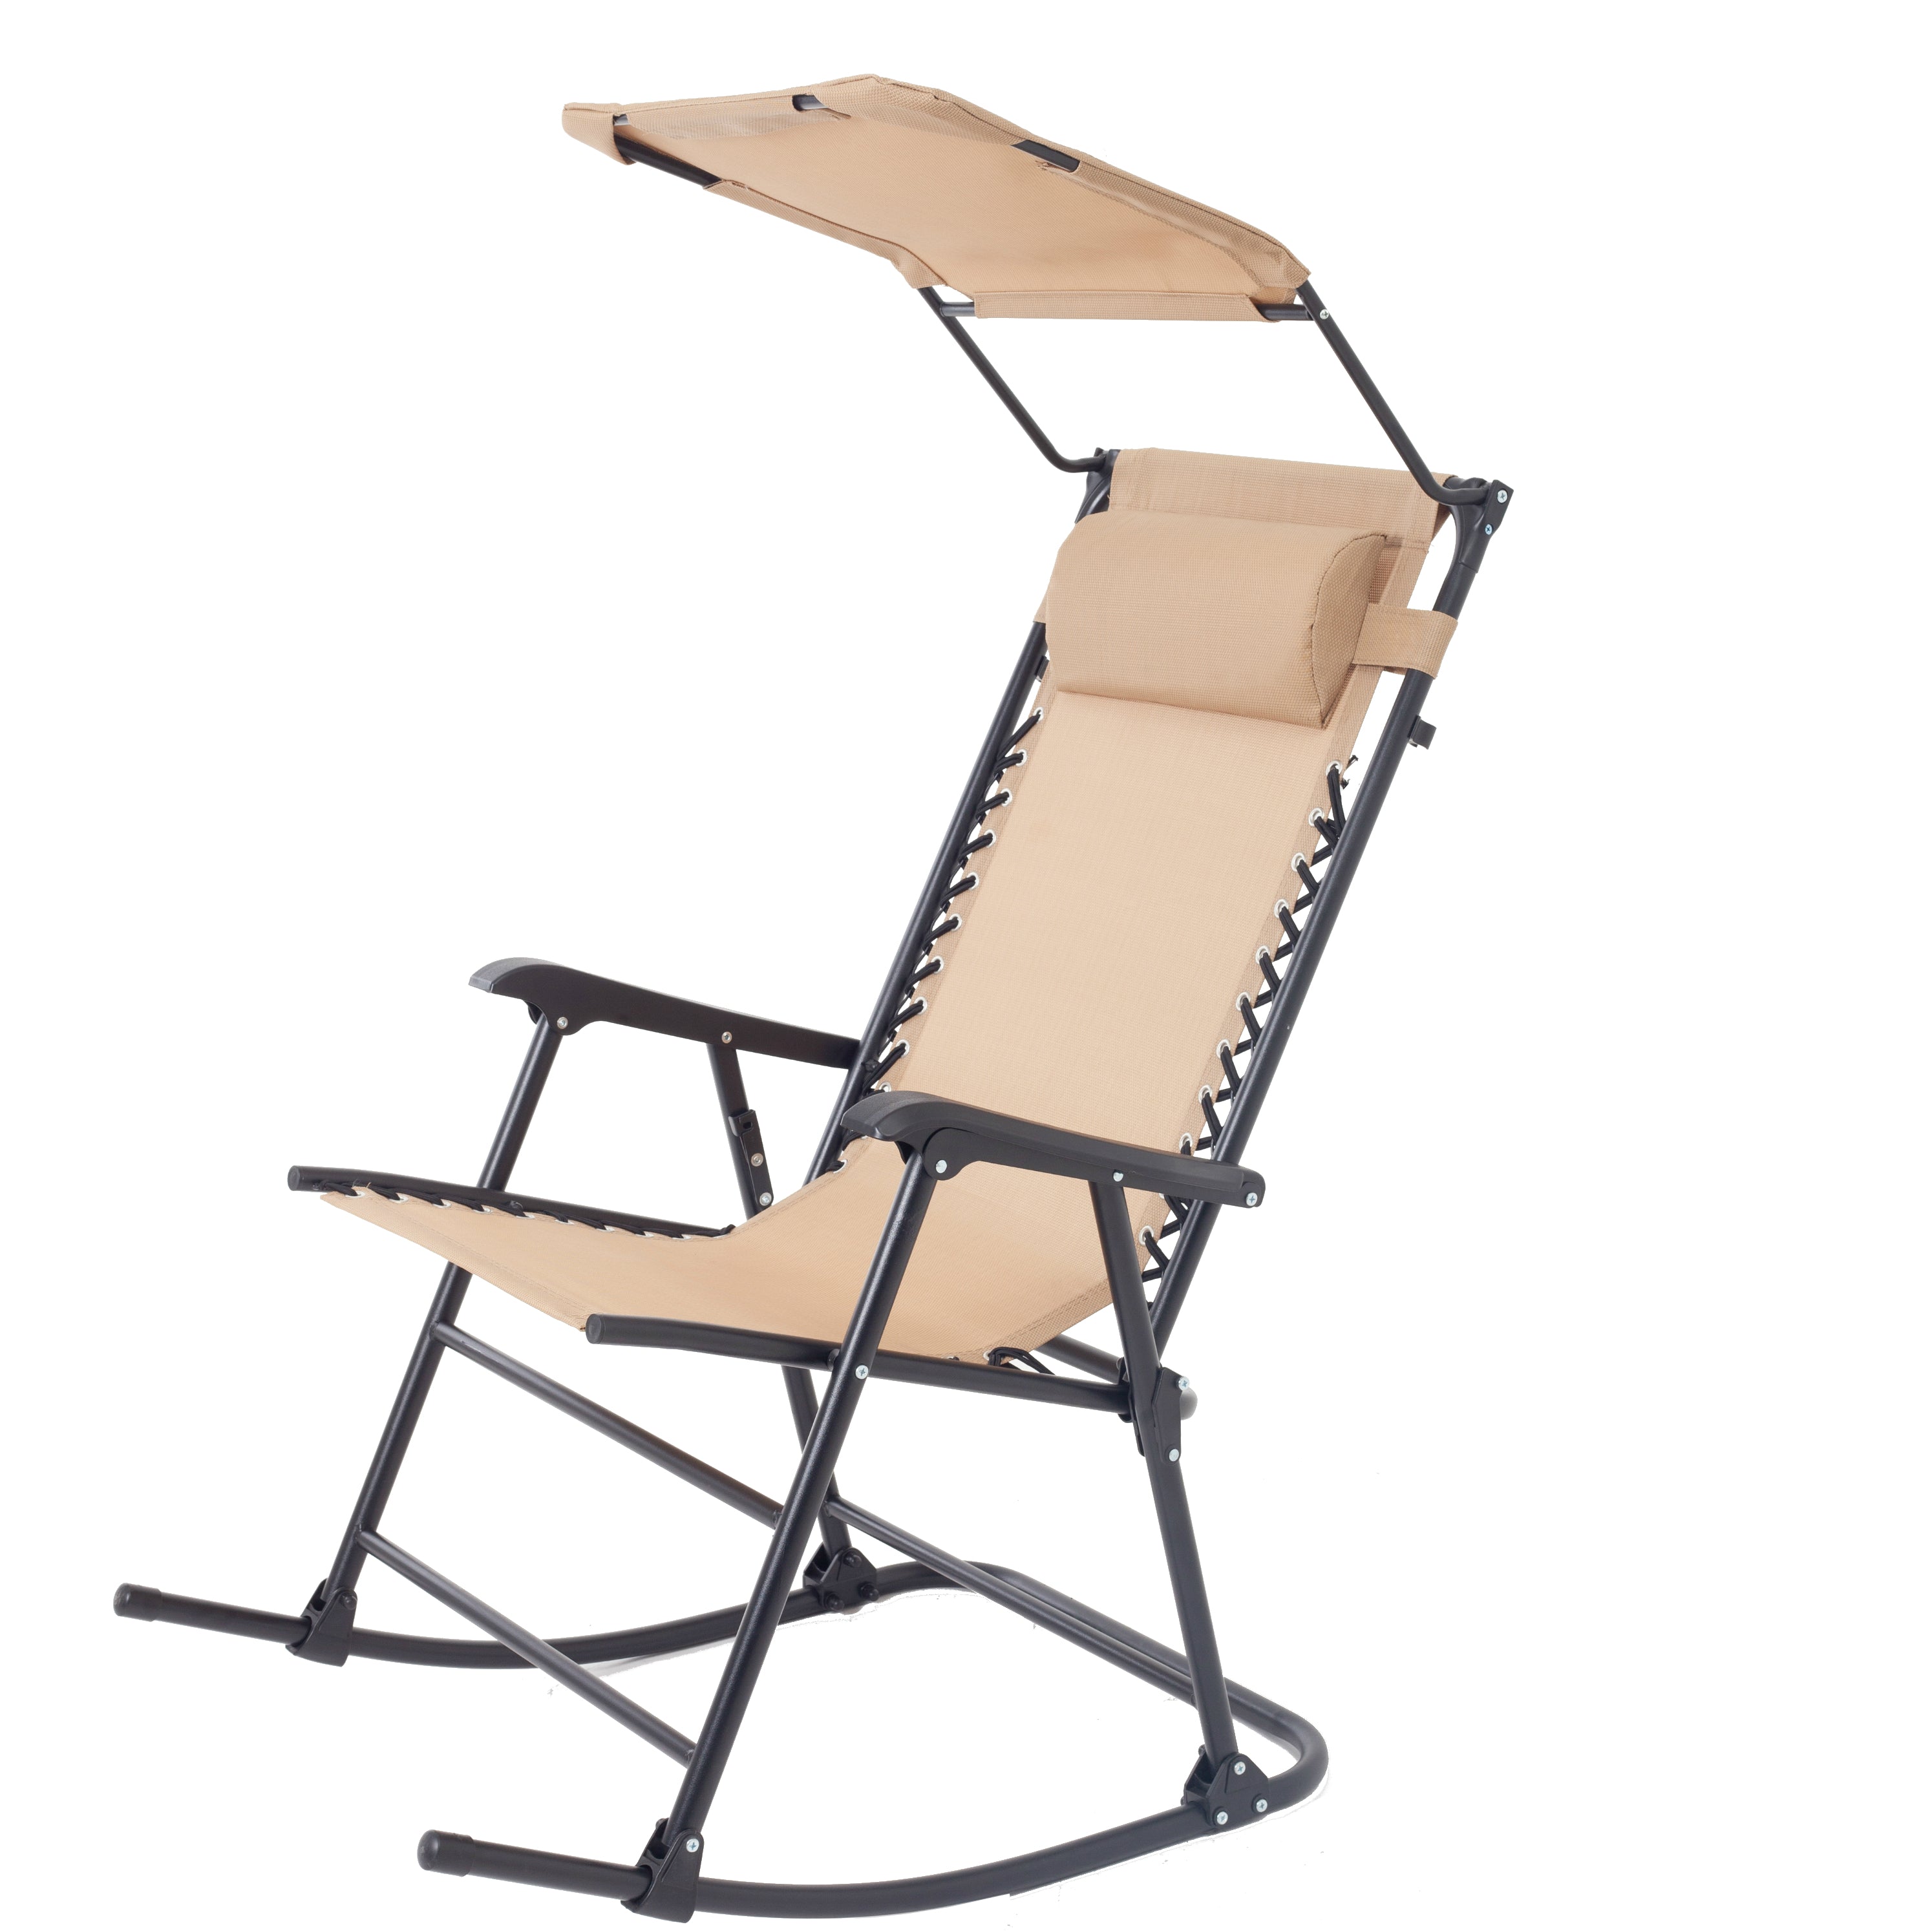 BTEXPERT Zero Gravity Folding Rocker Porch Sunshade Canopy Headrest Pillow Metal Outdoor Arm Beige, One Piece, Tan, Rocking Chair - image 2 of 5